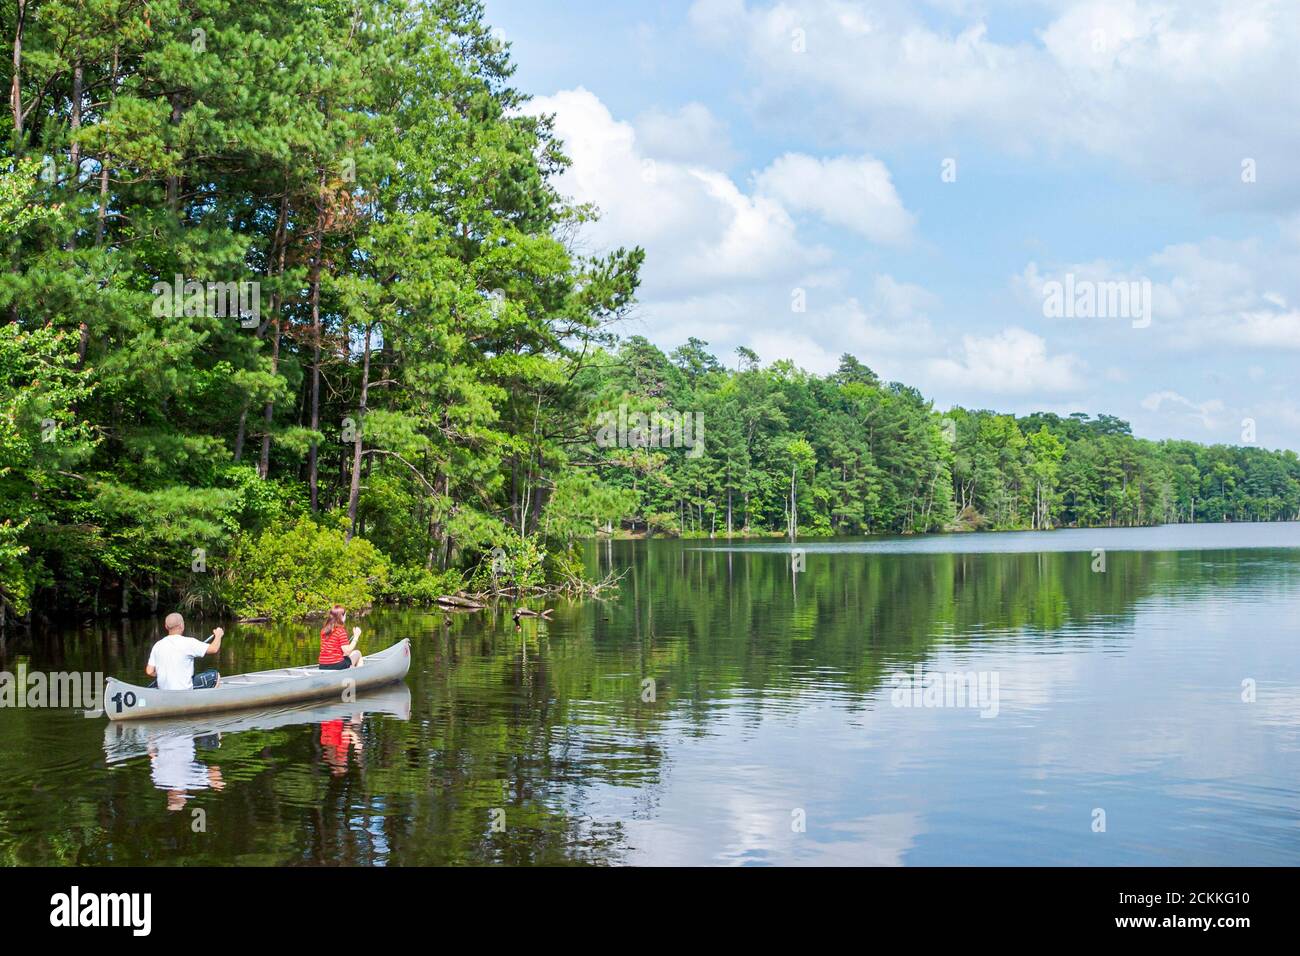 Virginia Newport News Park recreación naturaleza paisaje natural, hombre mujer pareja mujer canoa barco remar agua Beaverdam Creek, Foto de stock